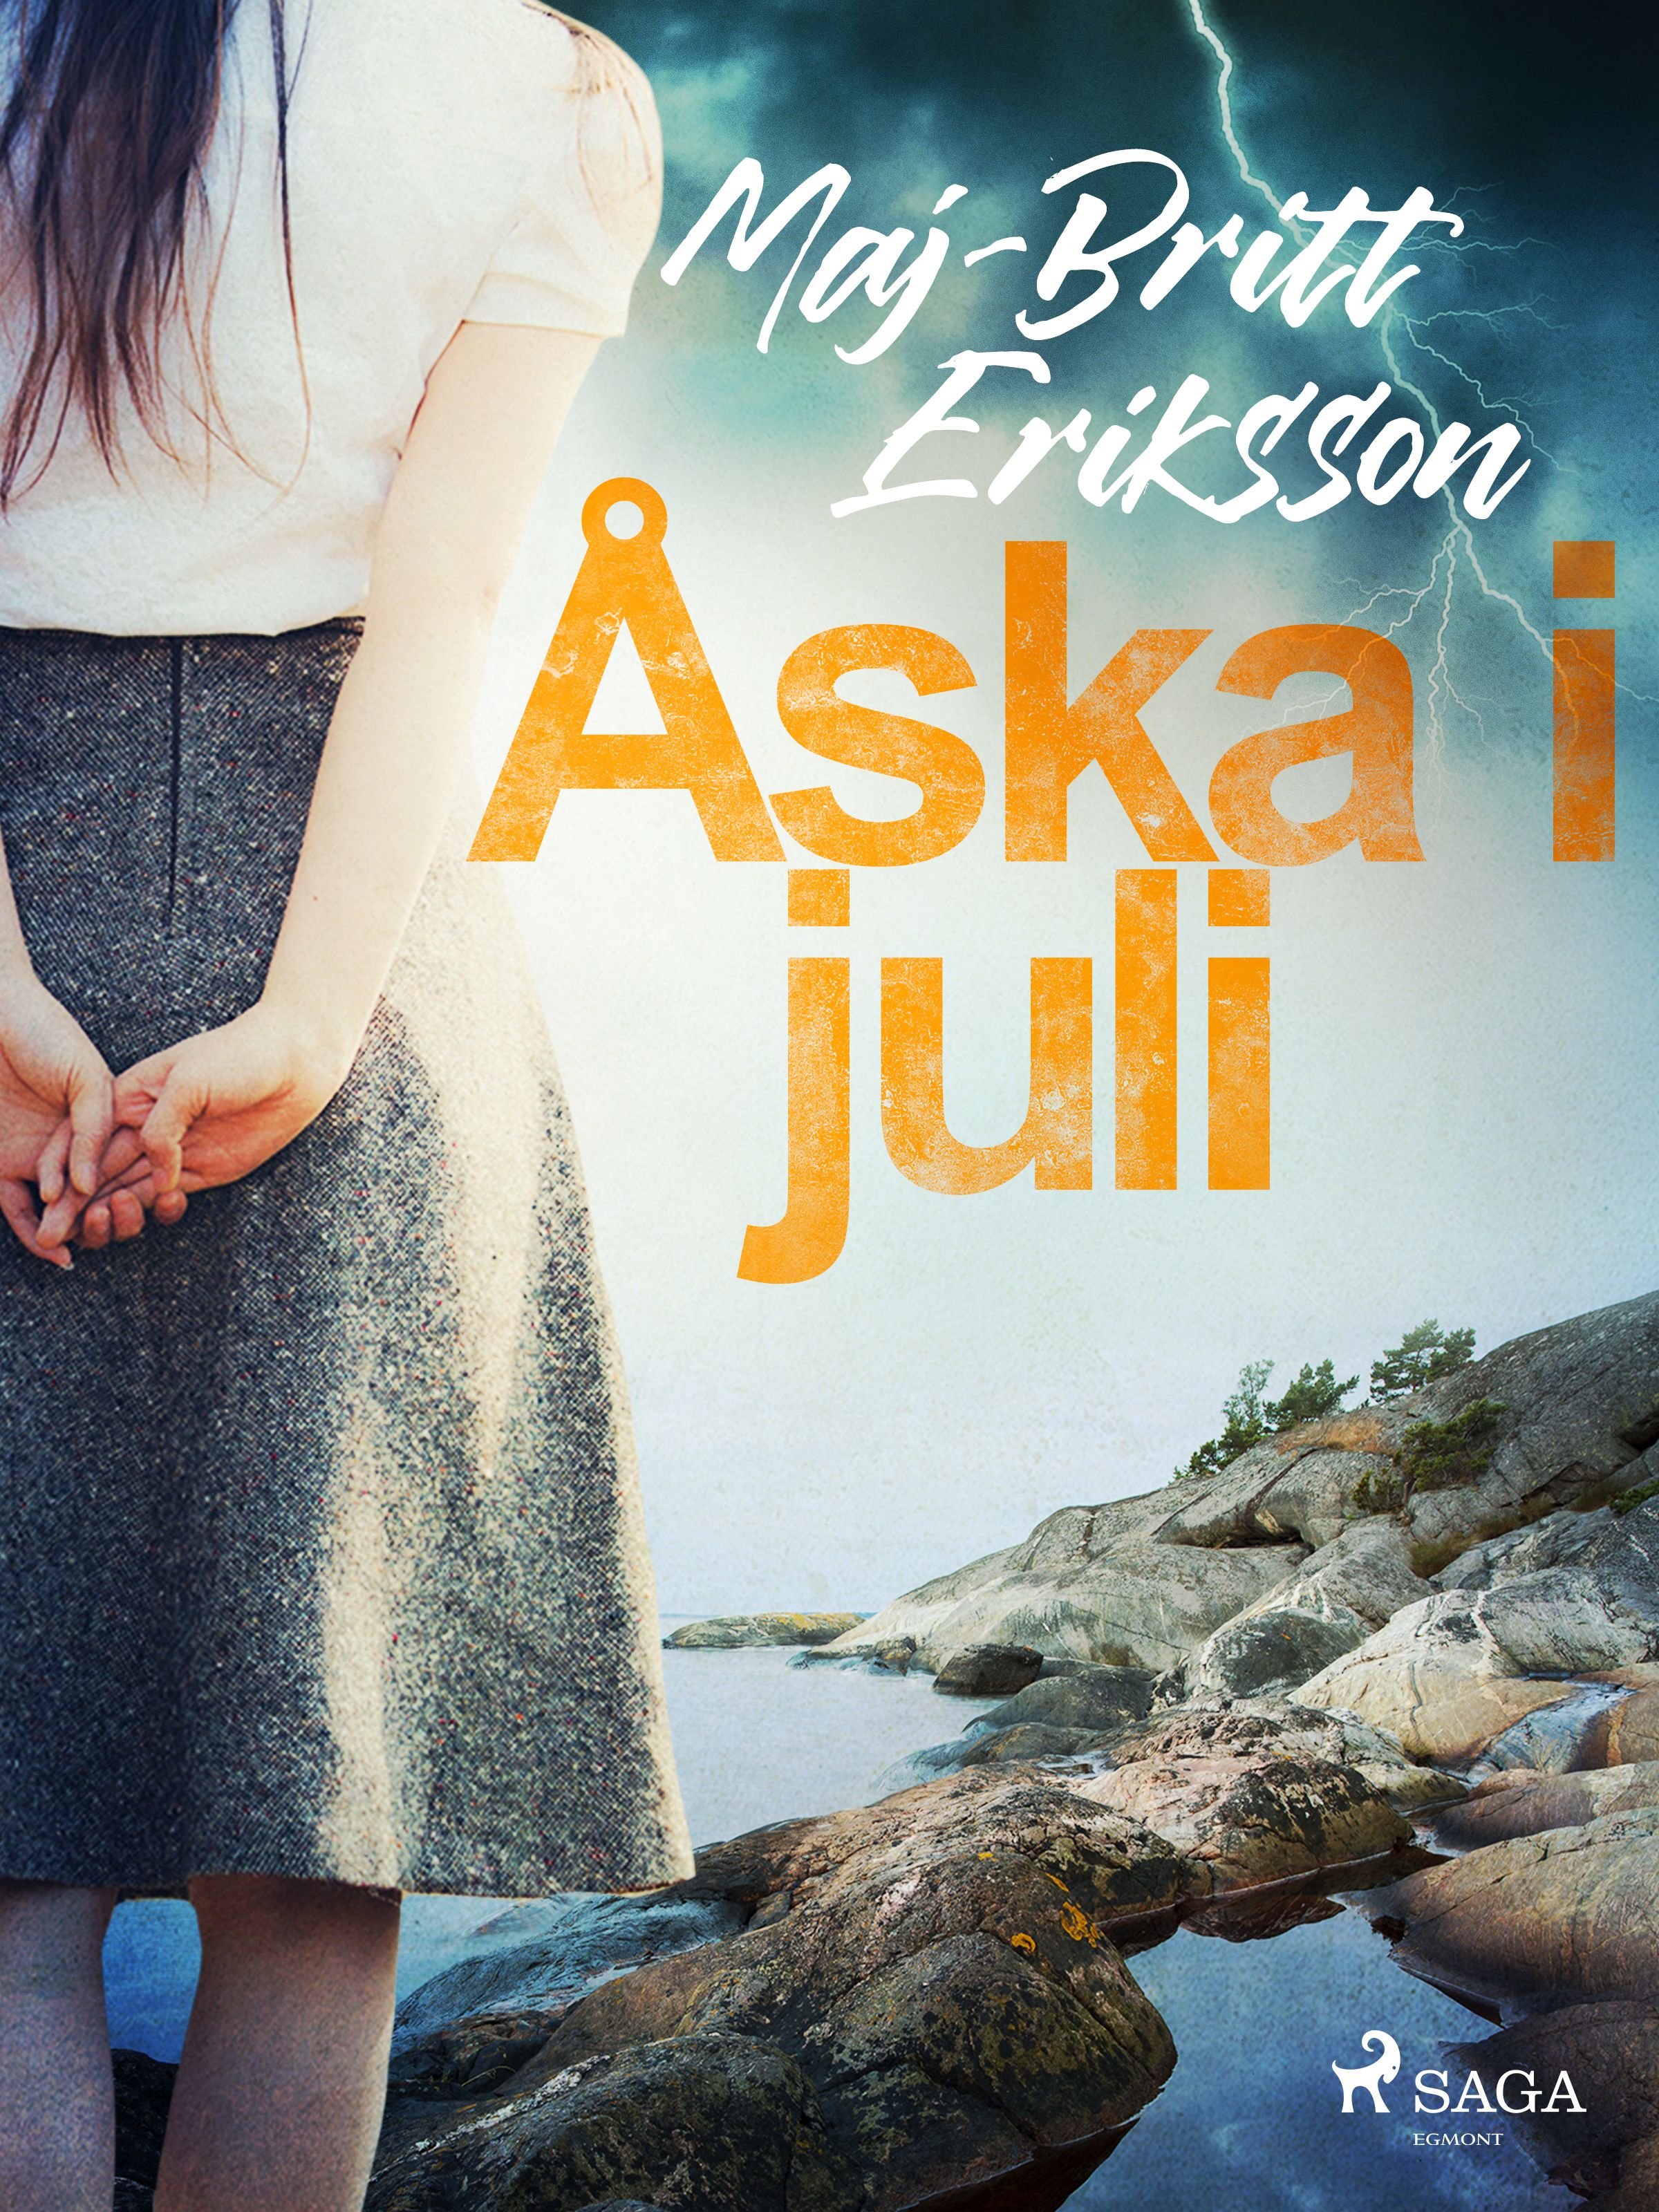 Åska i juli, eBook by Maj-Britt Eriksson